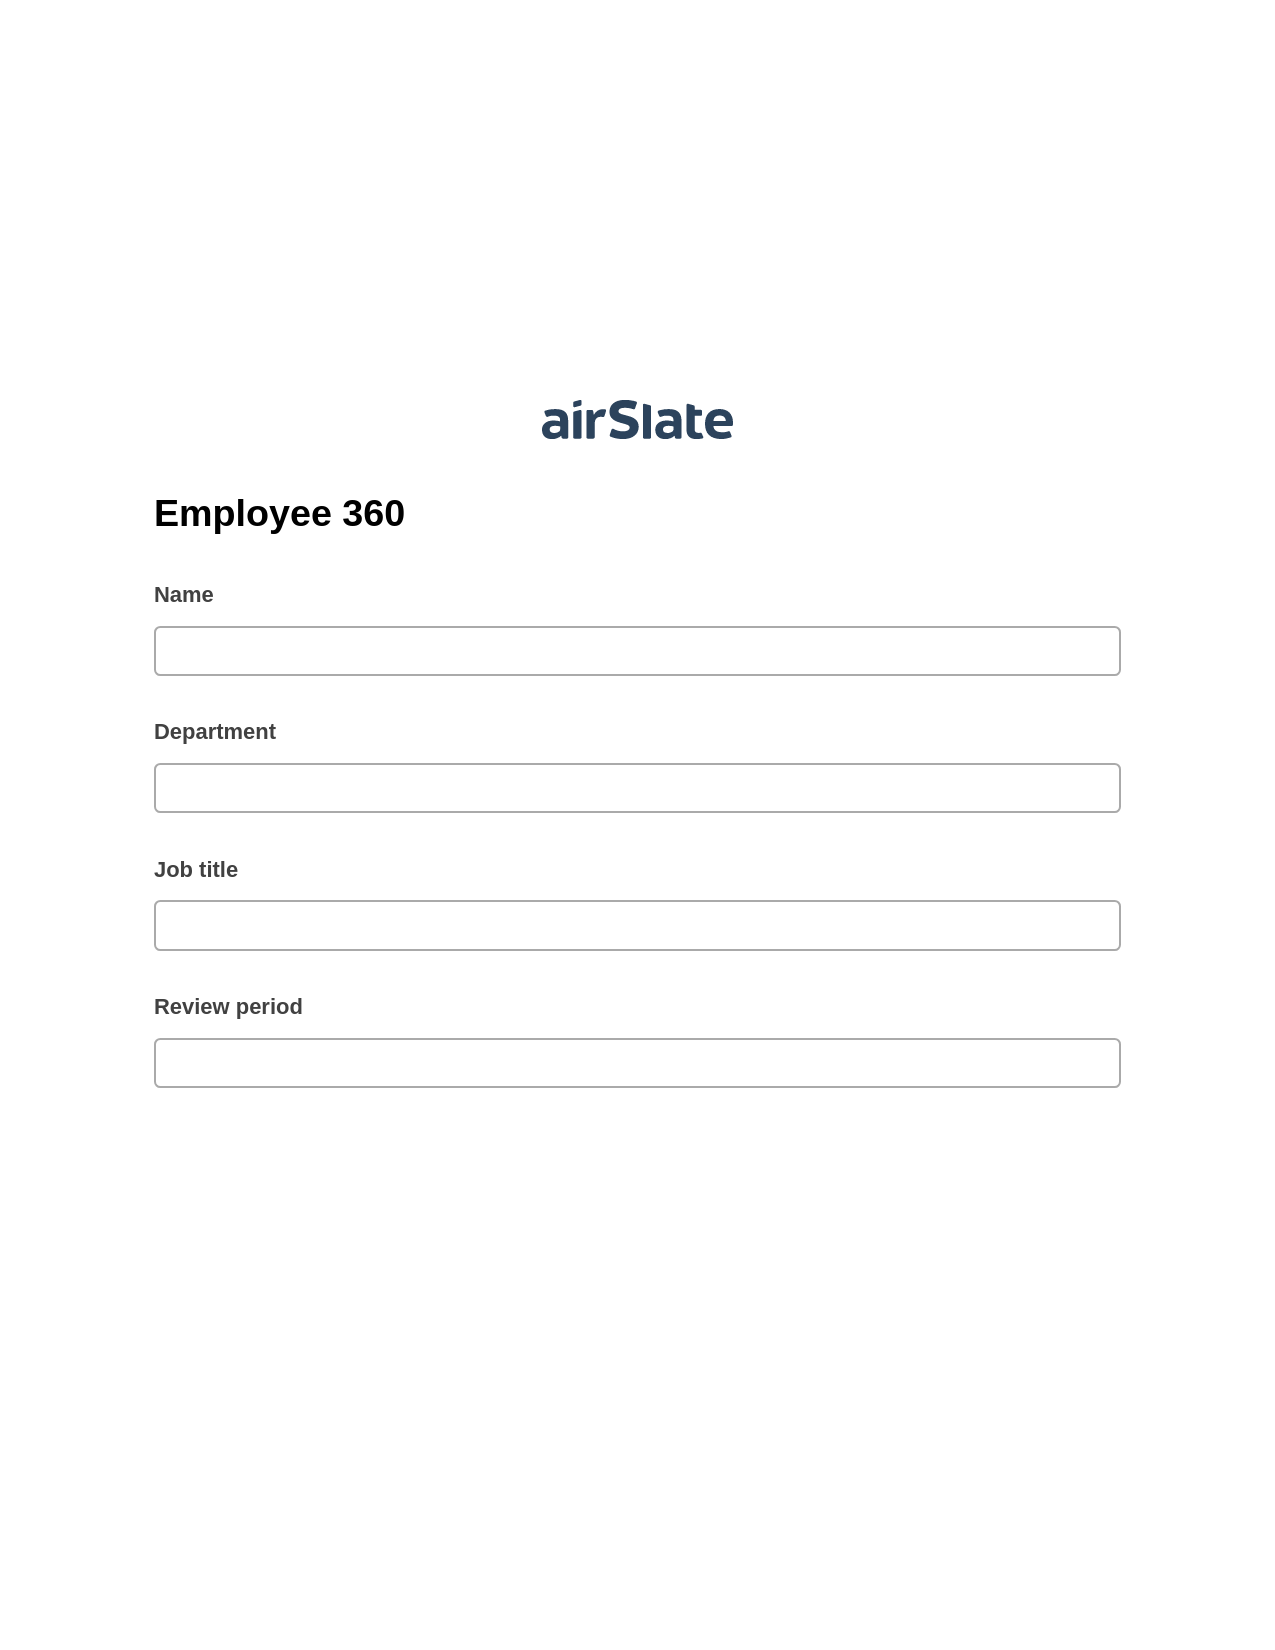 Multirole Employee 360 Prefill from NetSuite records, Custom Field's Value Bot, Webhook Postfinish Bot